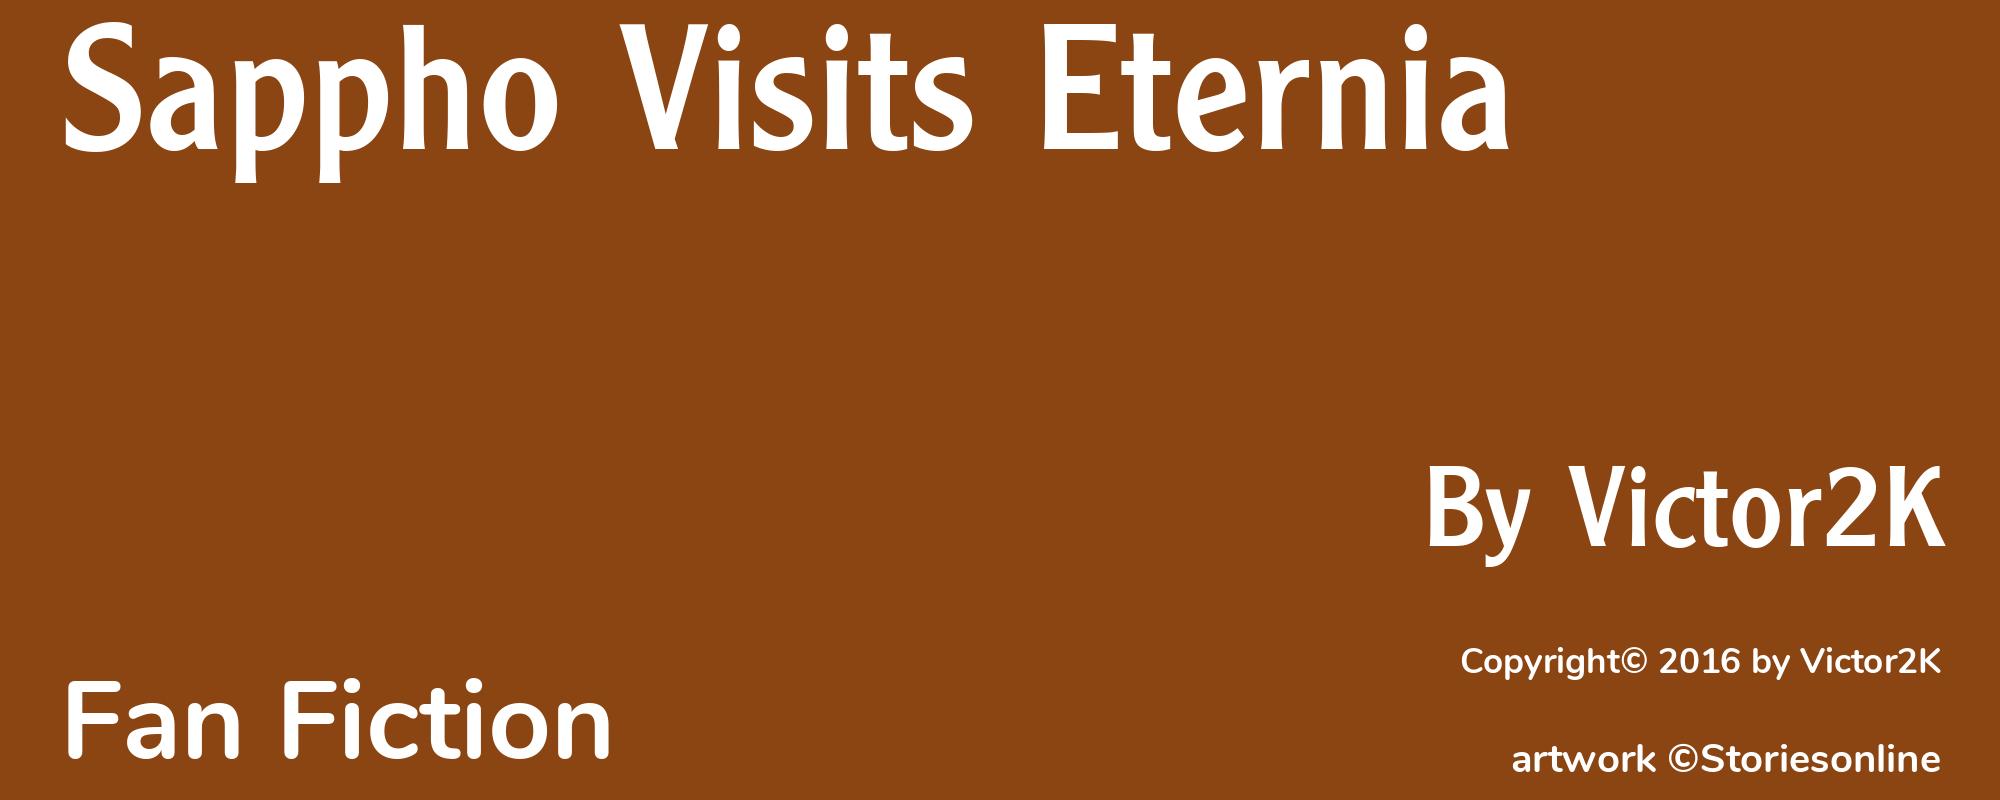 Sappho Visits Eternia - Cover